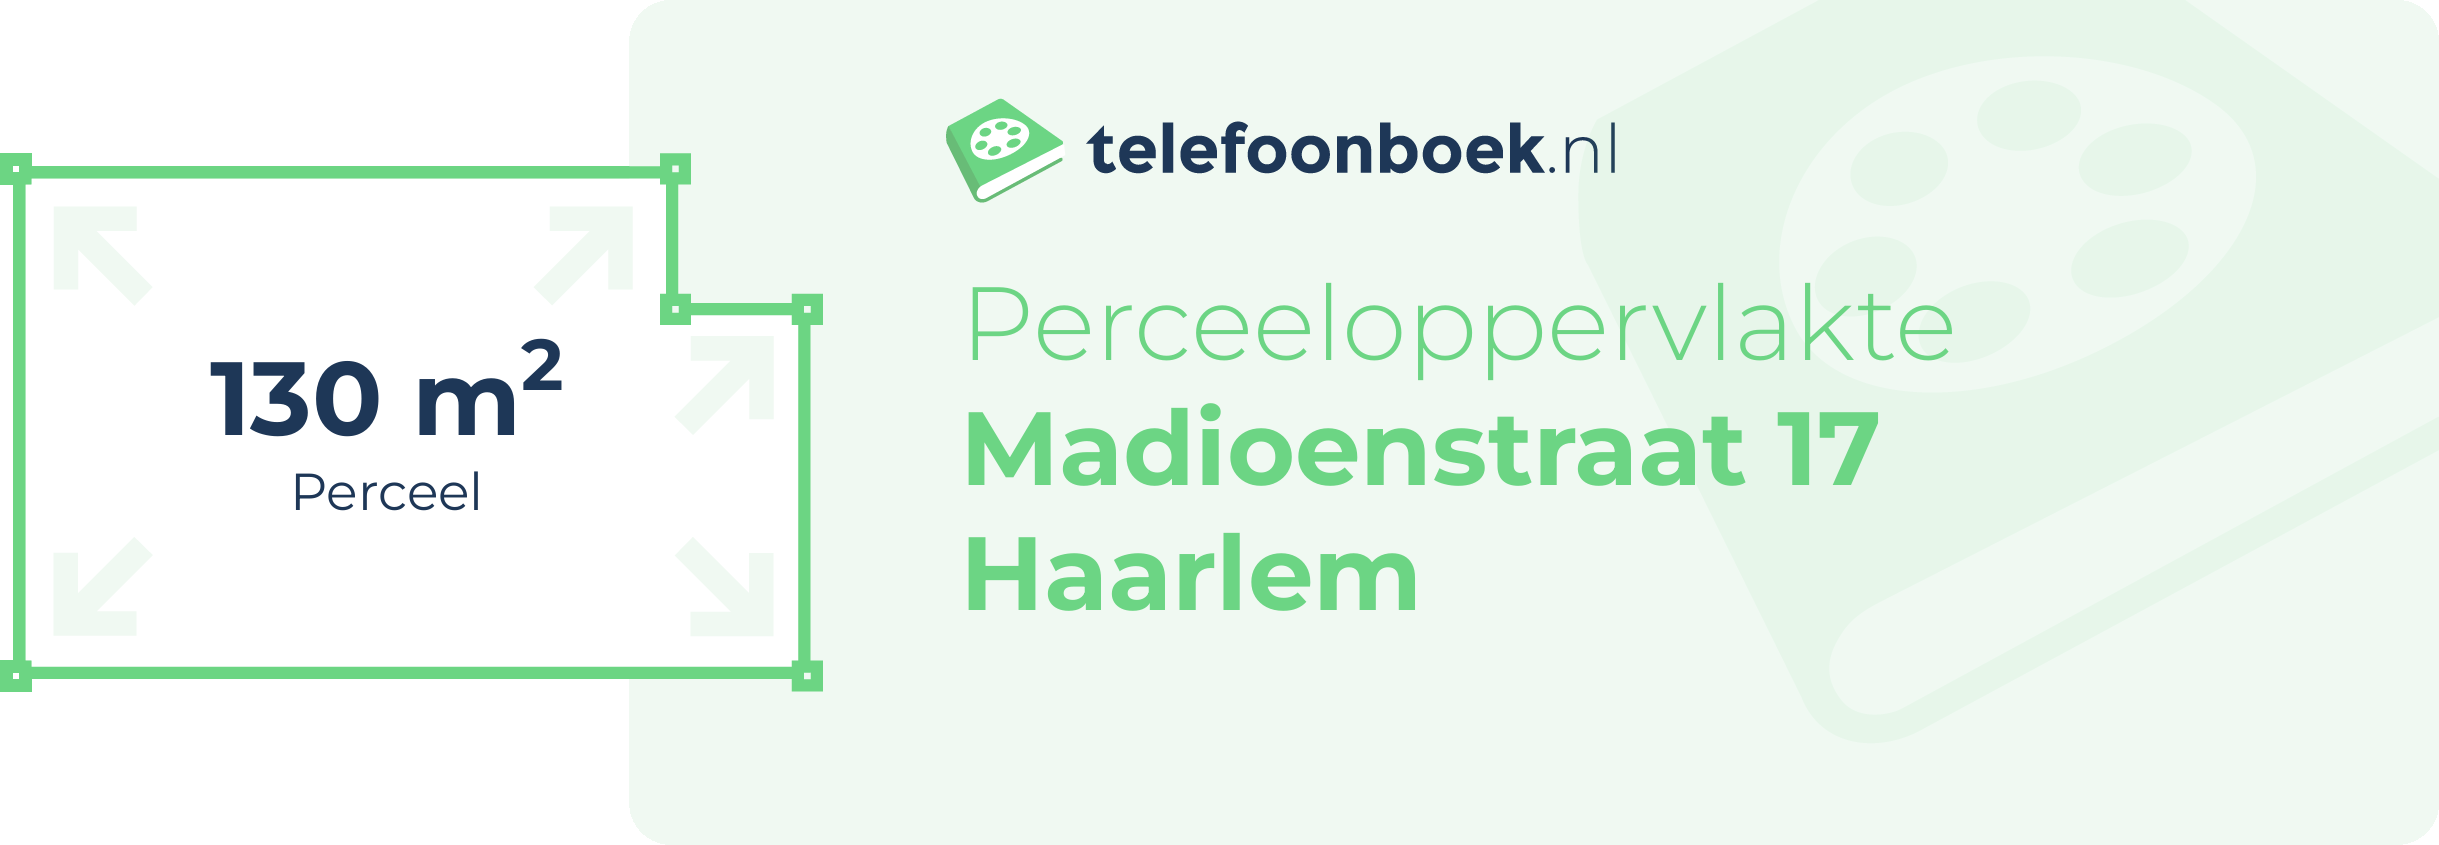 Perceeloppervlakte Madioenstraat 17 Haarlem